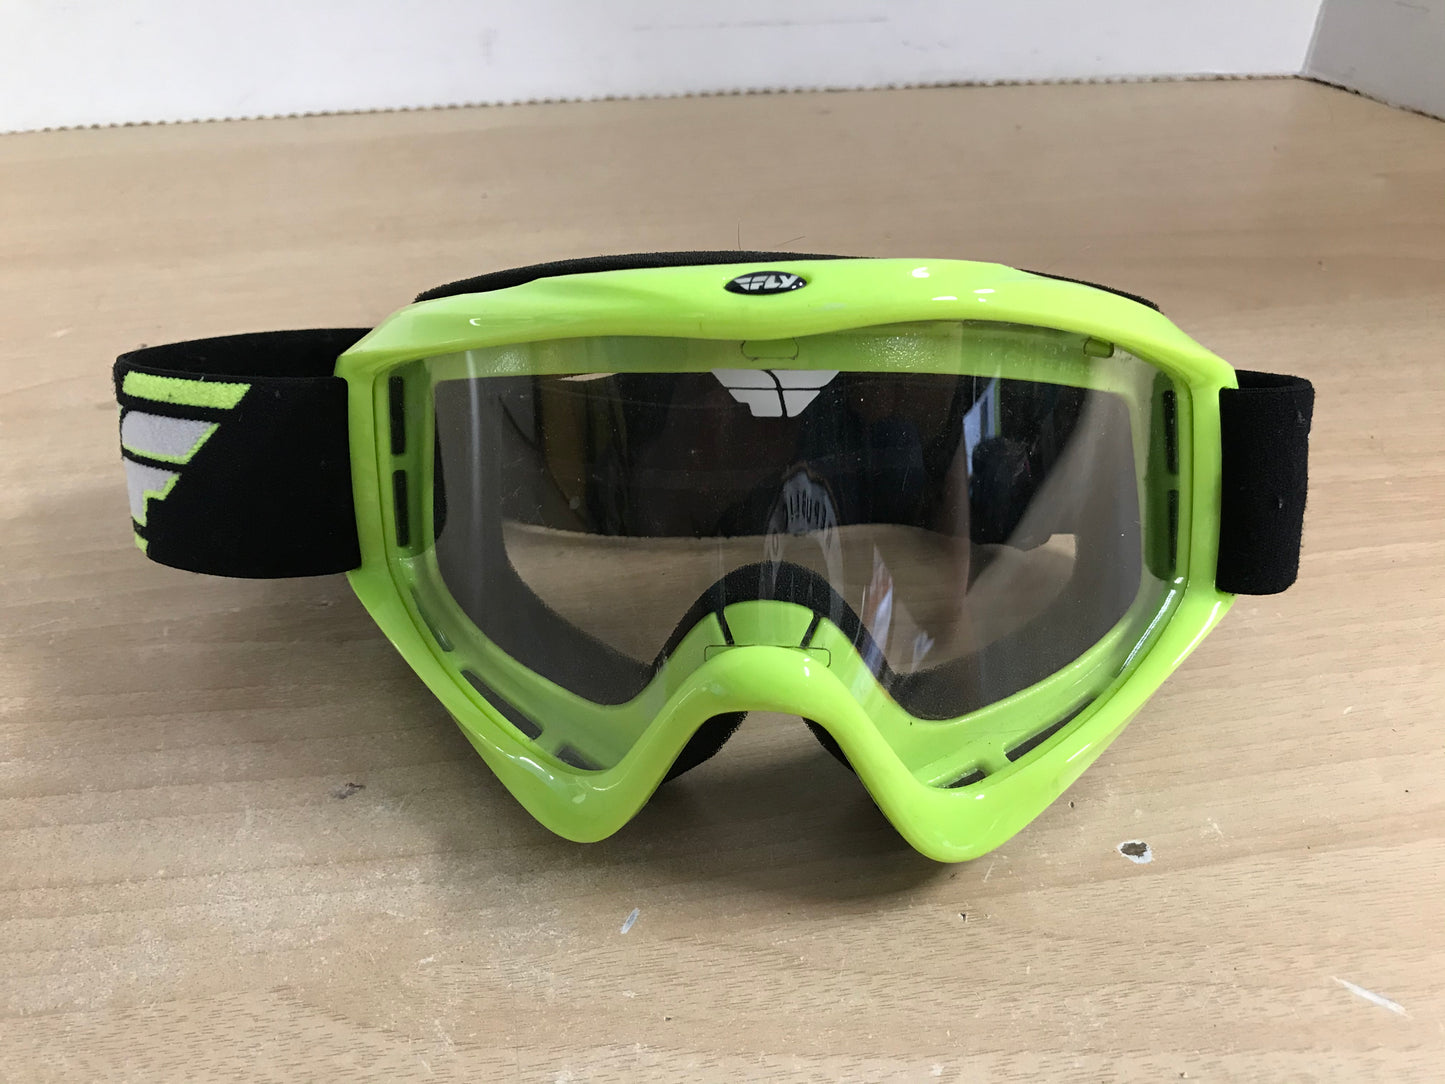 Motocross BMX Dirt Bike Goggles Fly Lime Black Adult Size